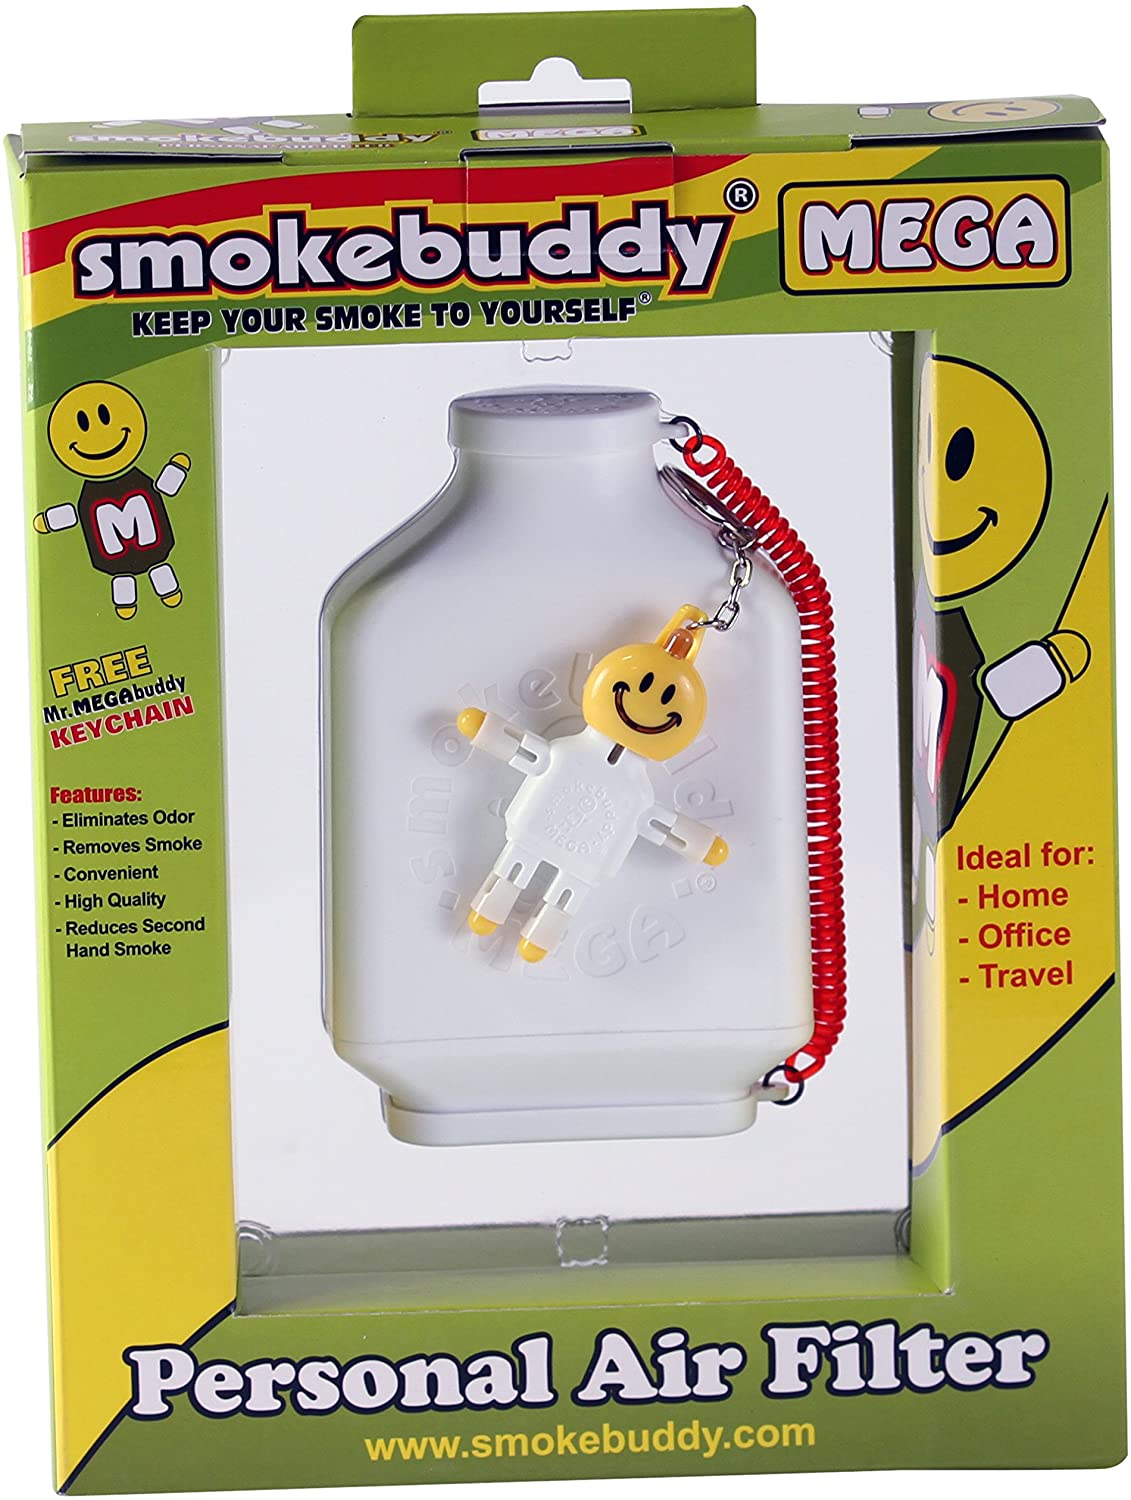 Smokebuddy MEGA personal Air Filter